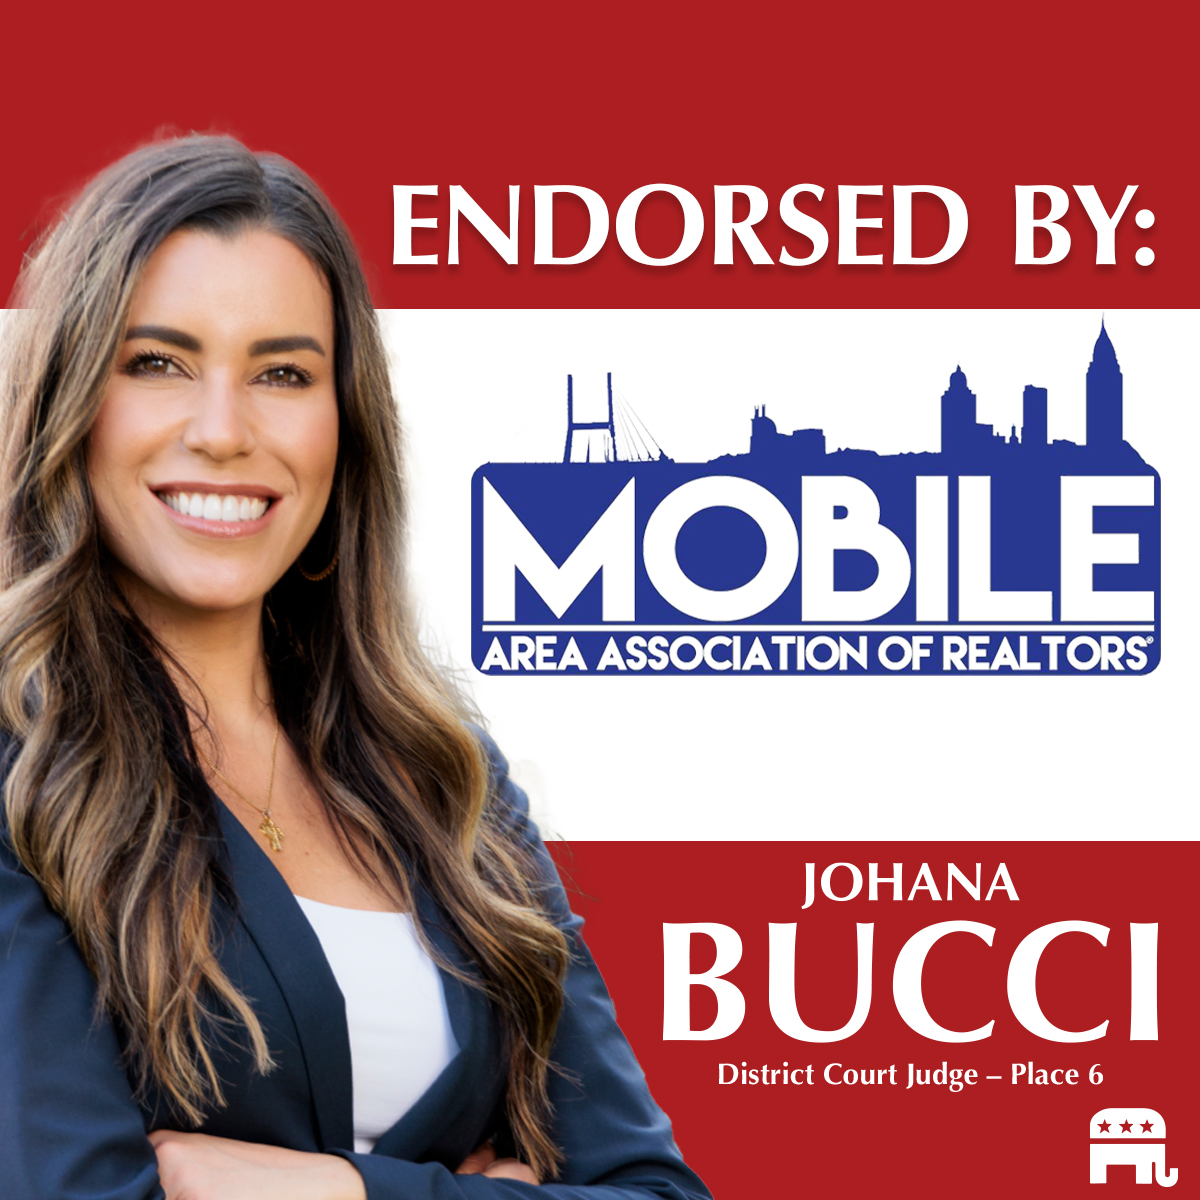 Bucci_Endorsement_Mobile-Realtors_1080x1080